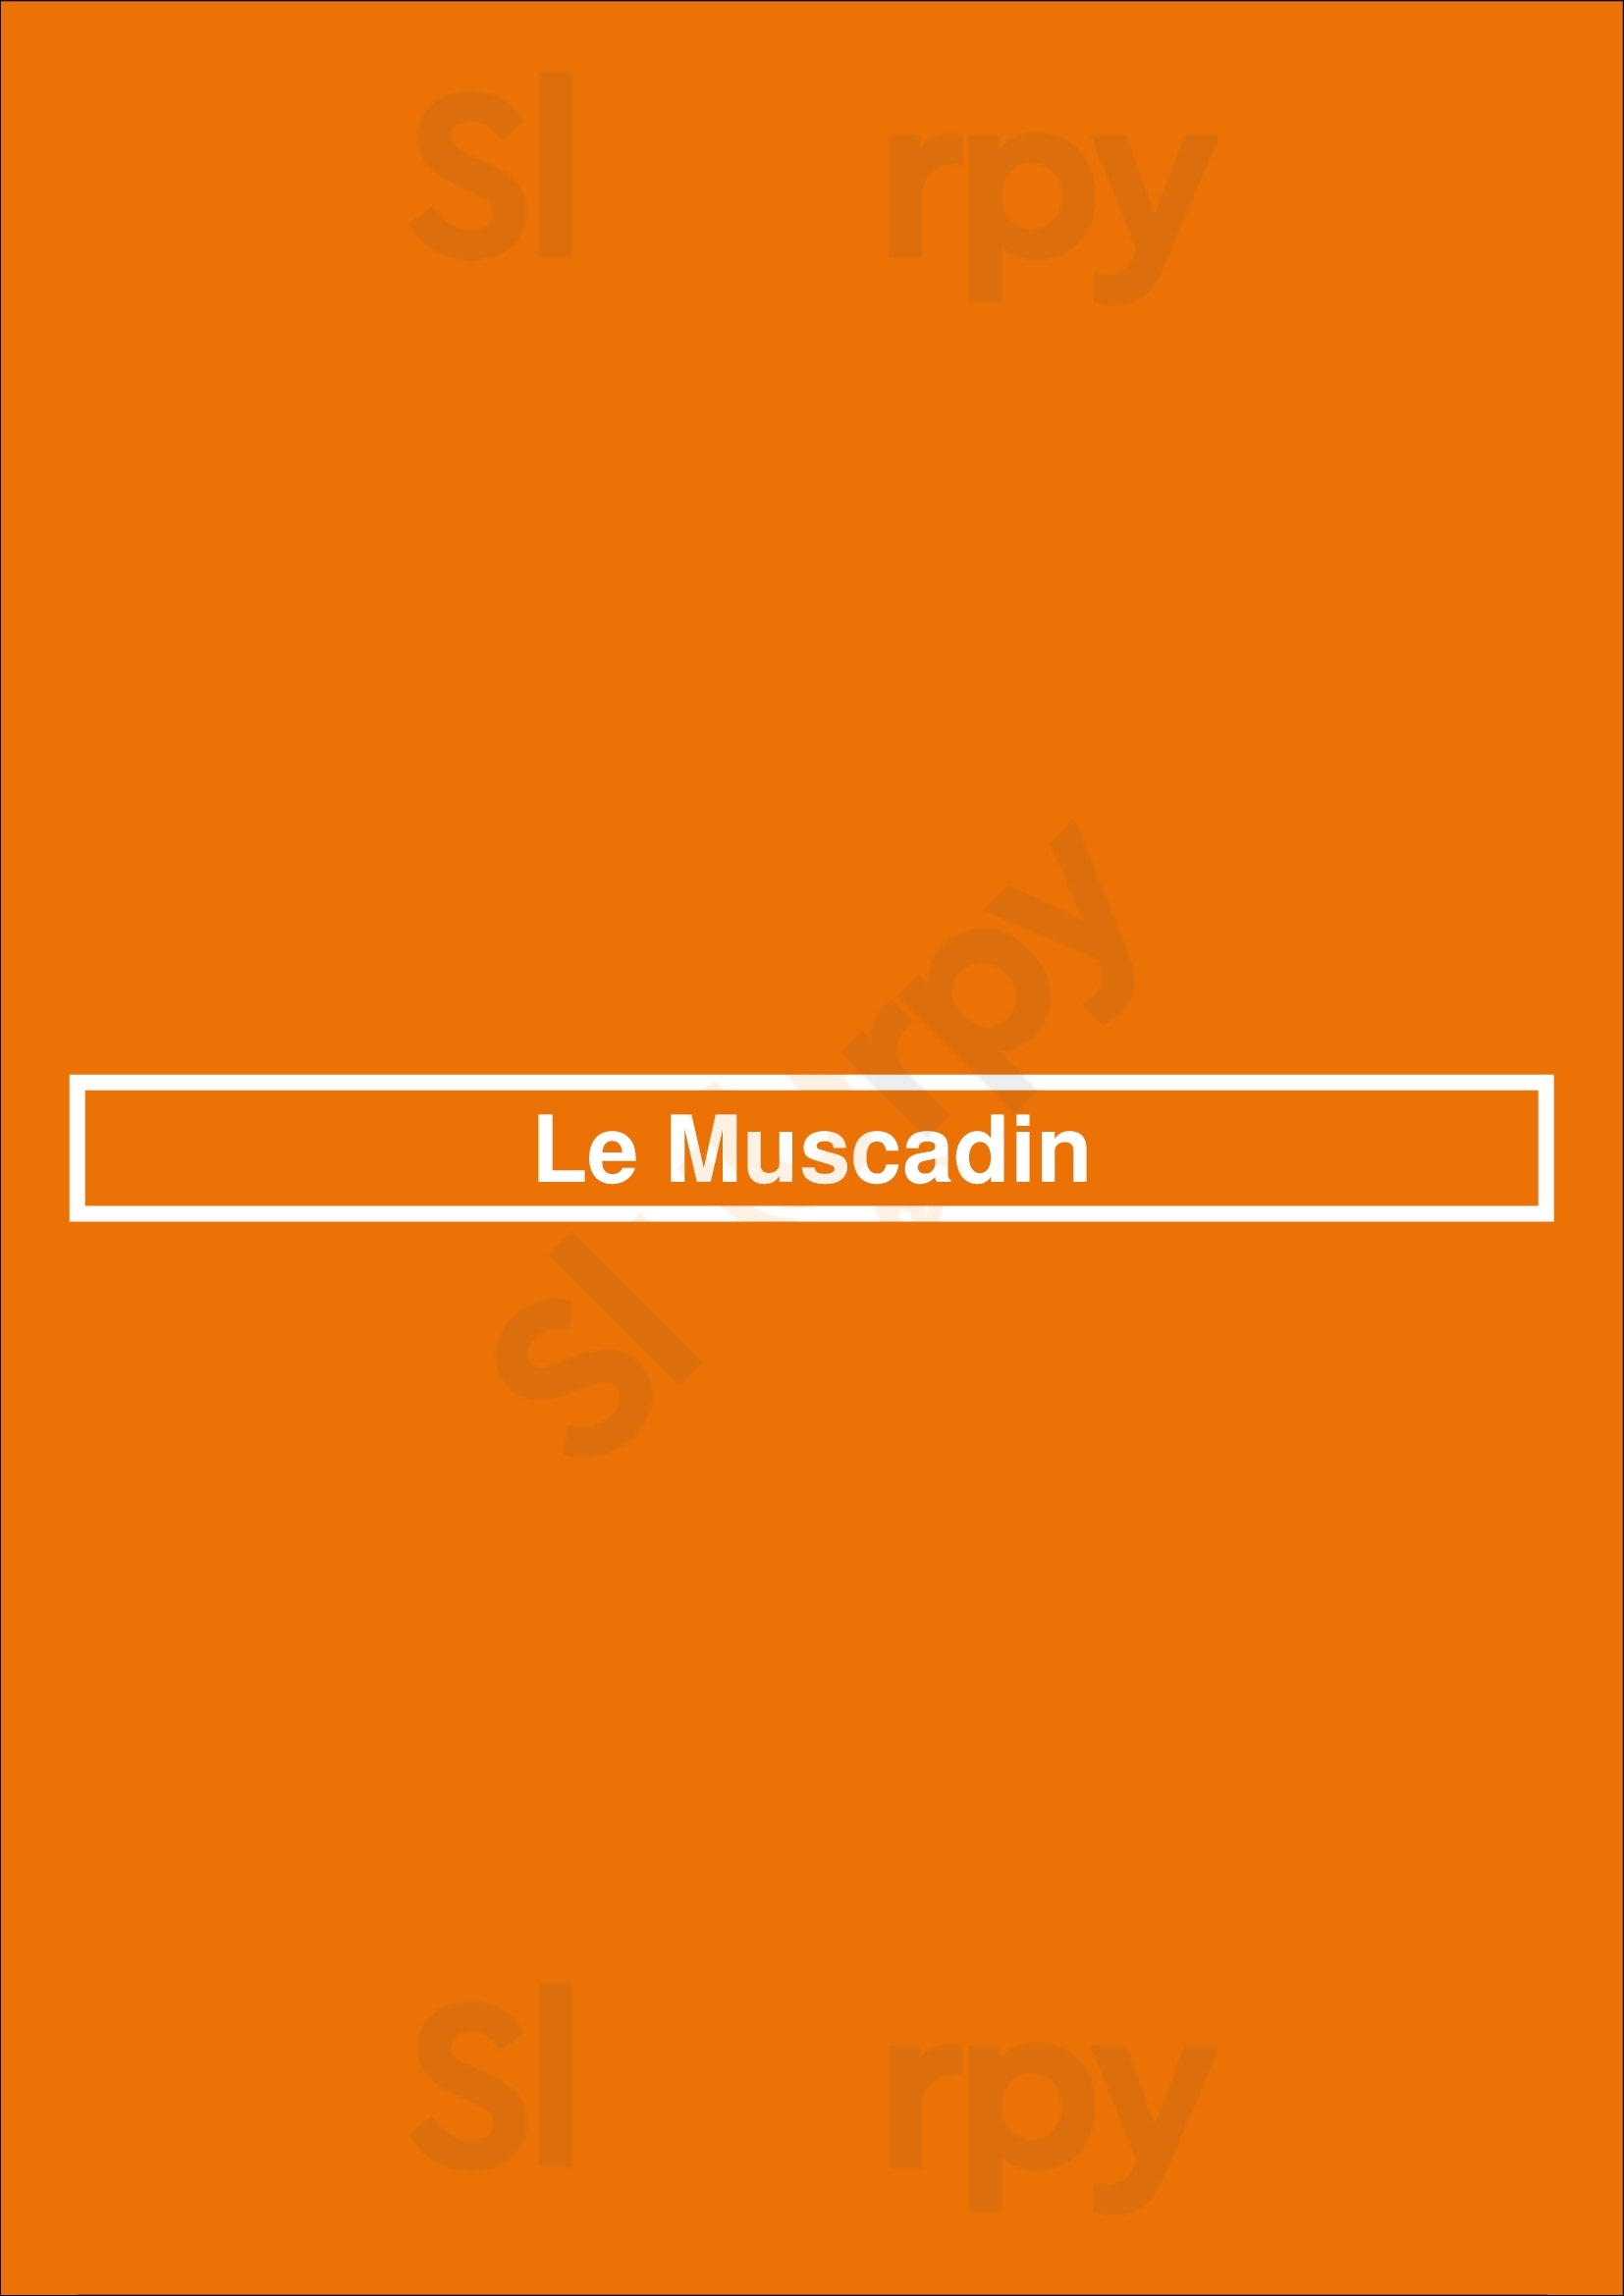 Restaurant Le Muscadin Montreal Menu - 1